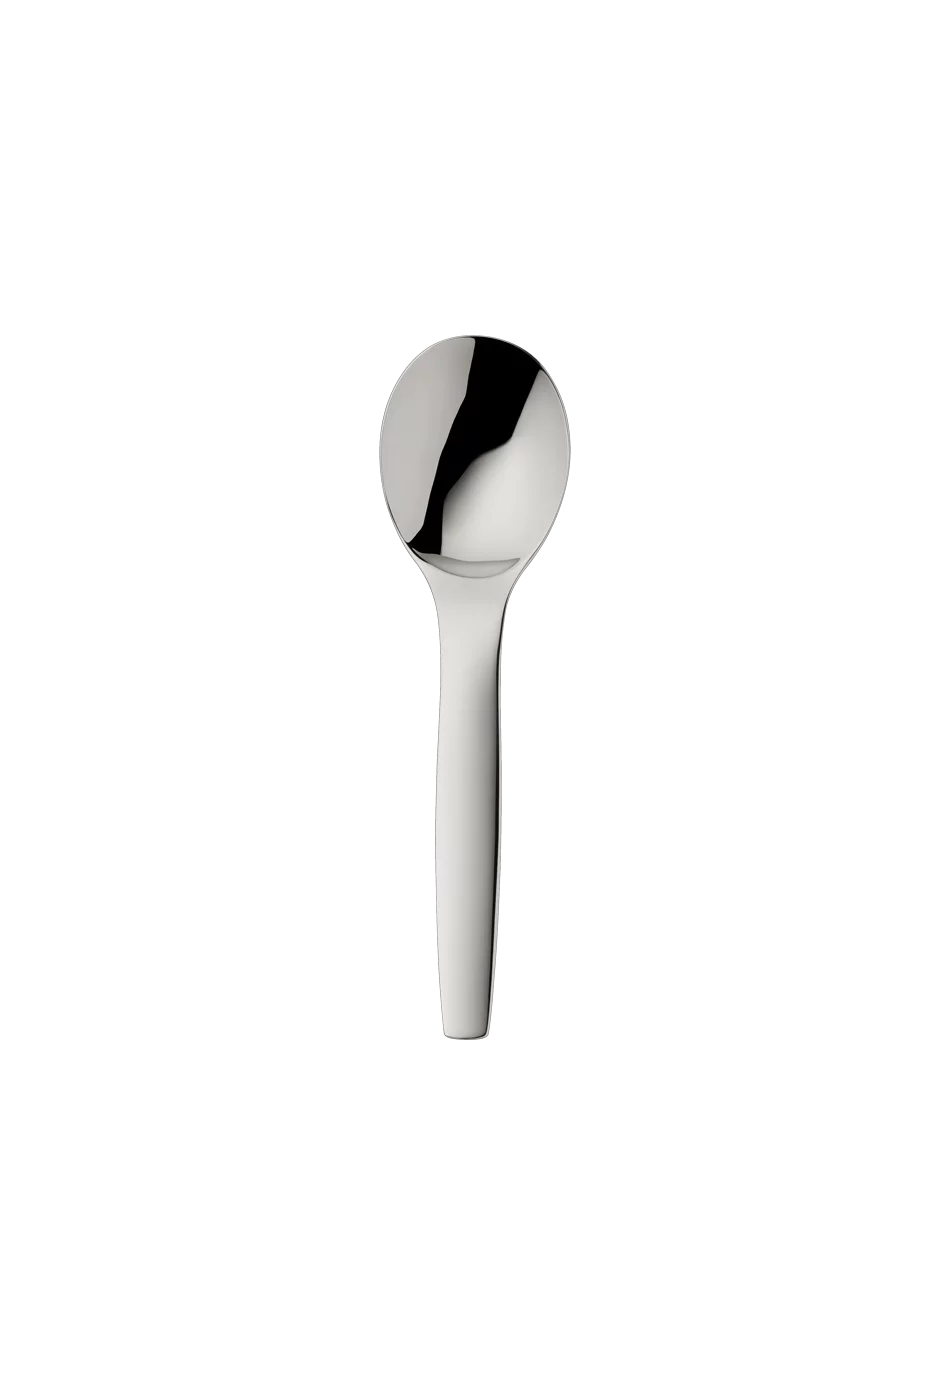 Pax Cream Spoon (Broth Spoon) (18/8 stainless steel)